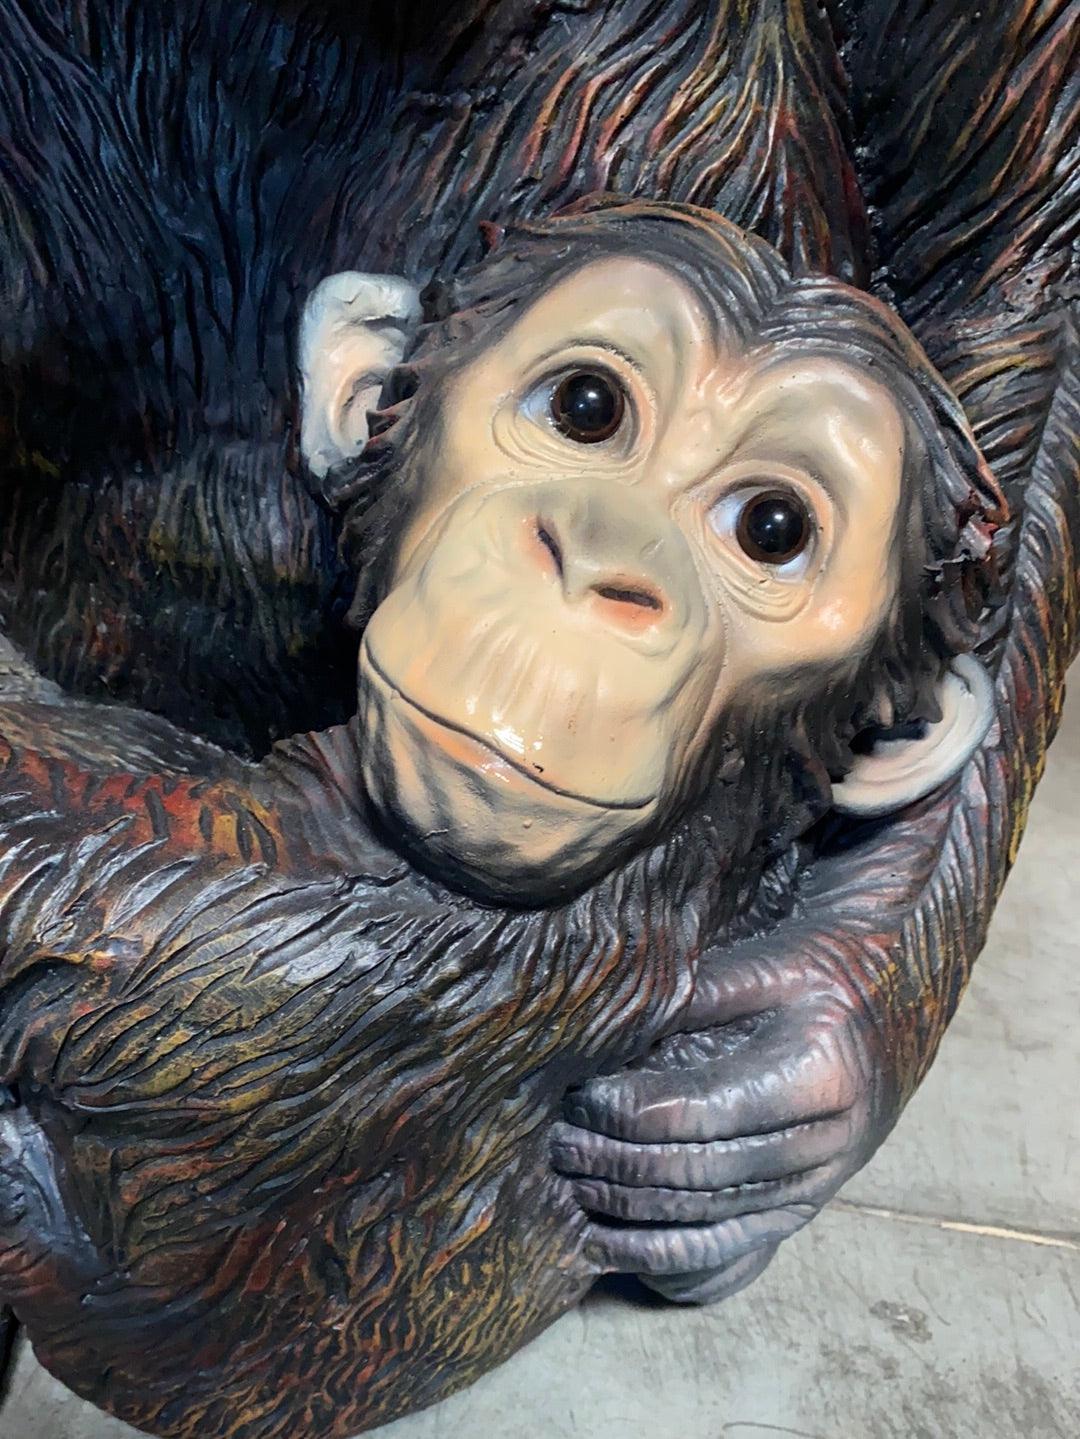 Monkey With Baby Statue - LM Treasures Prop Rentals 